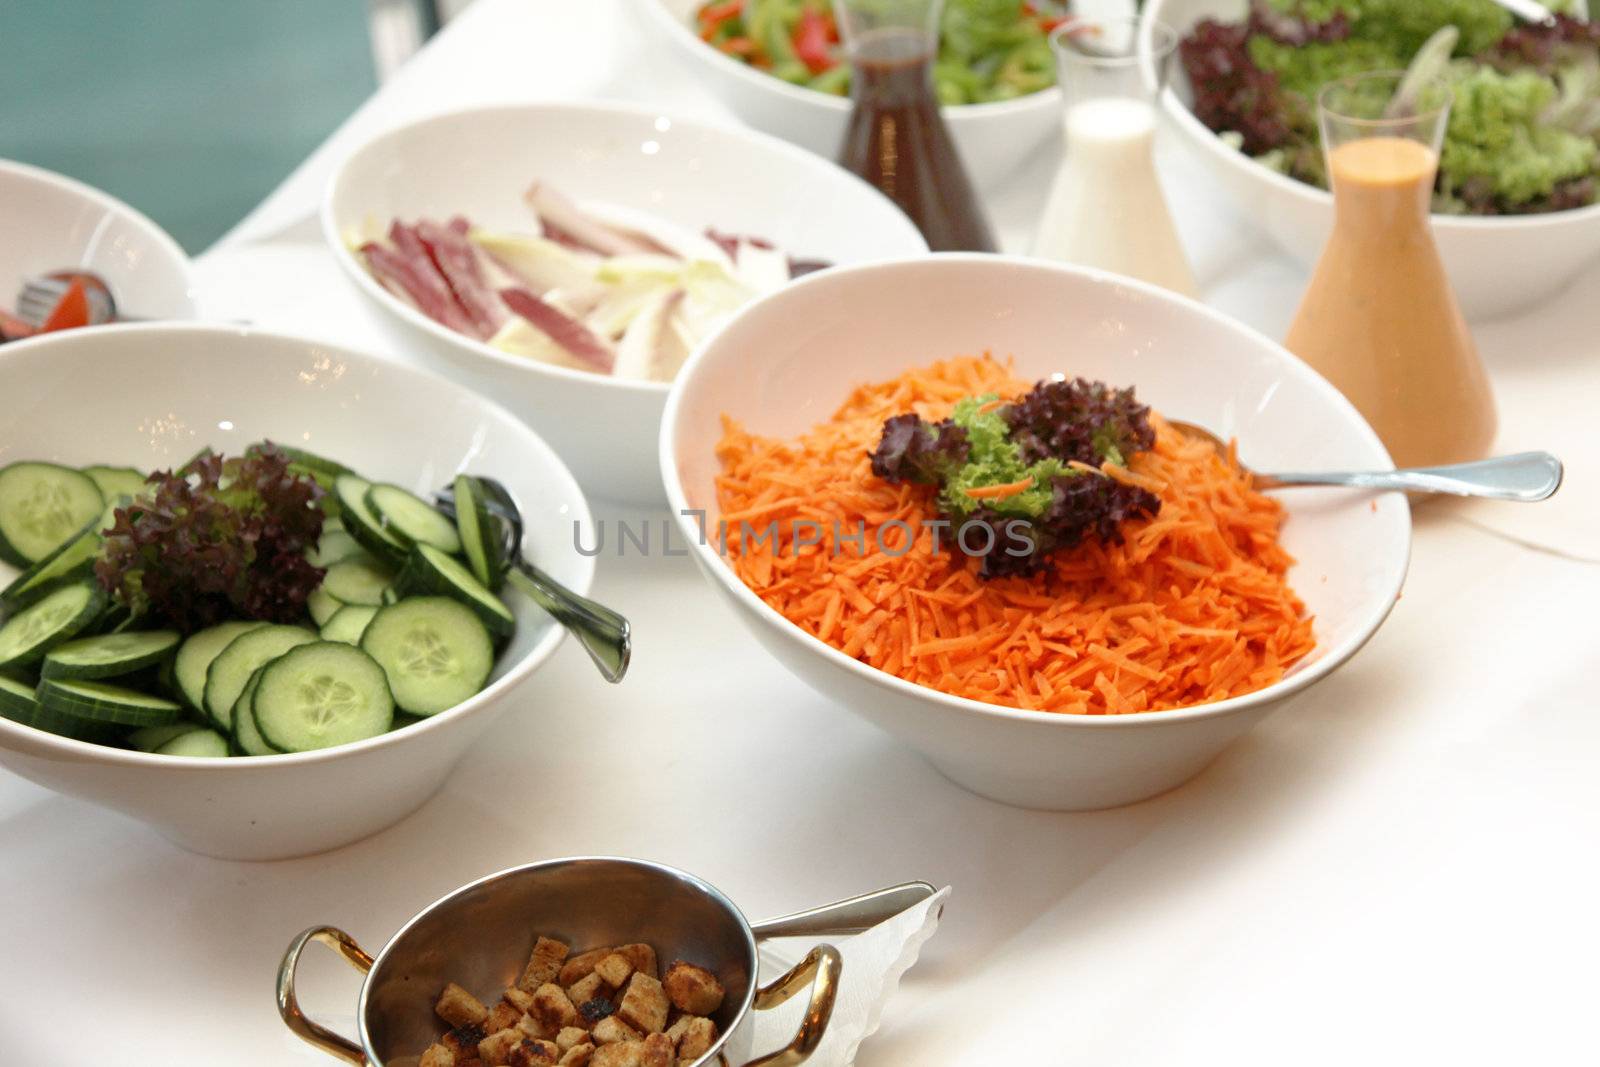 salad buffet by Farina6000